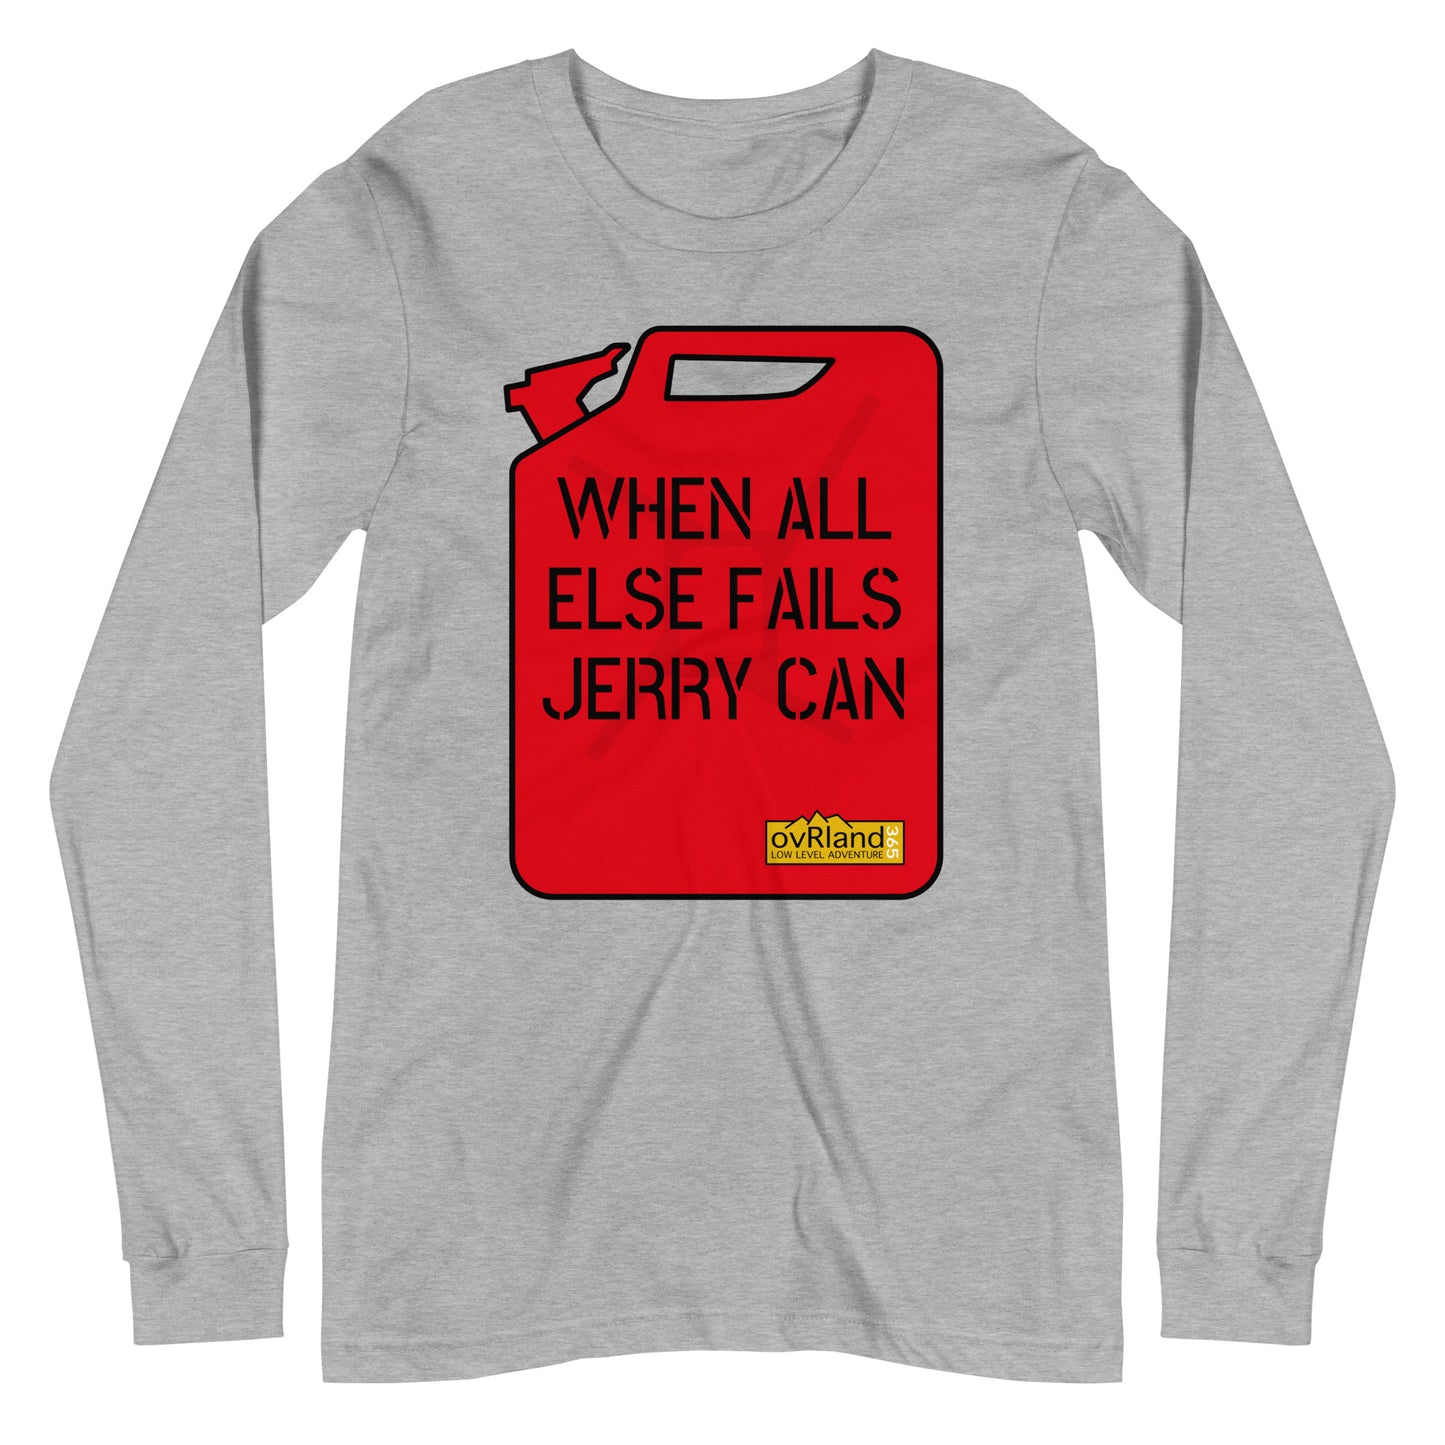 "WHEN ALL ELSE FAILS, JERRY CAN" - Light Grey long-sleeve. overland365.com